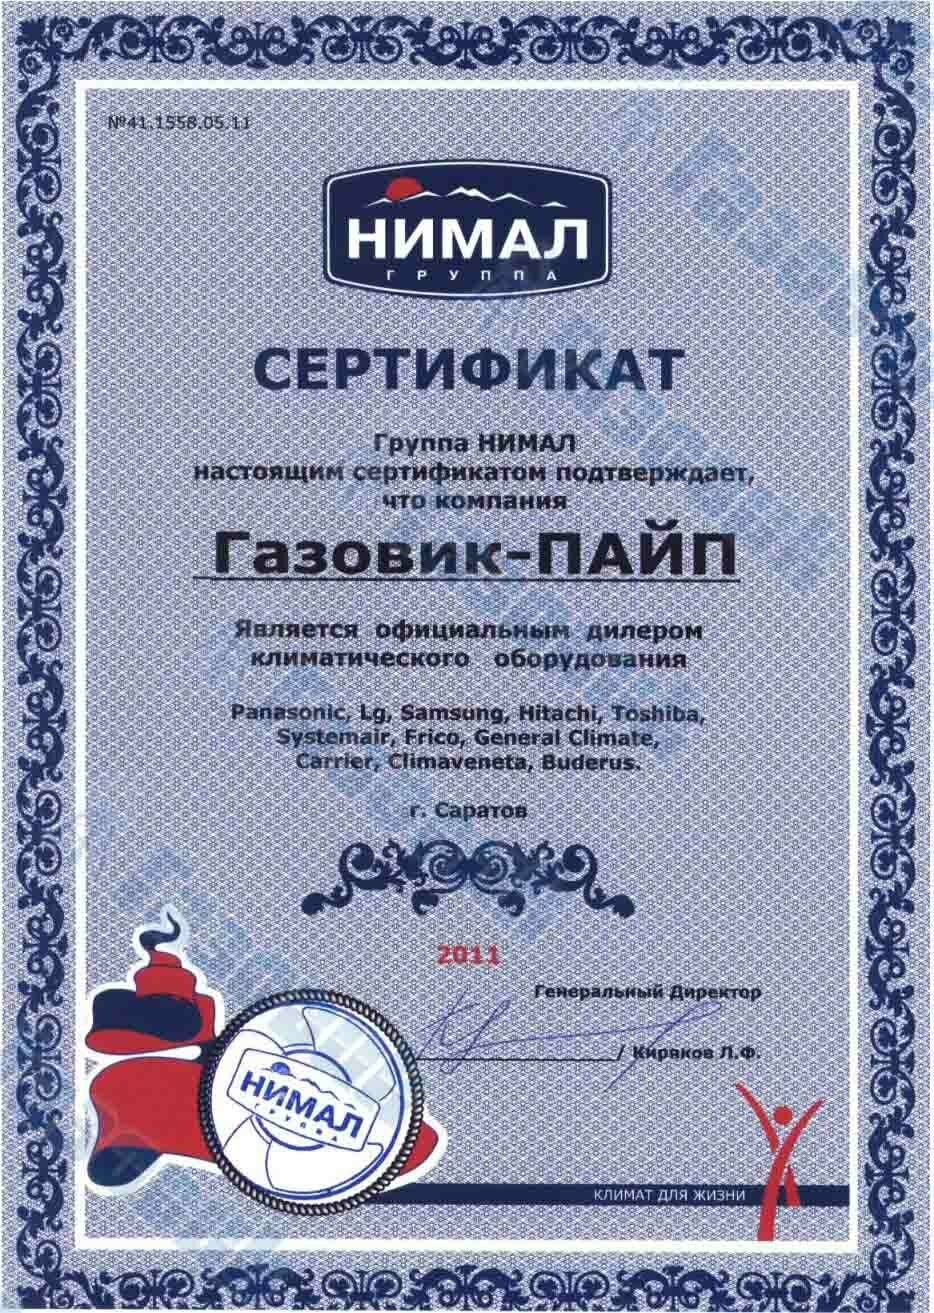 Сертификат от компании Нимал